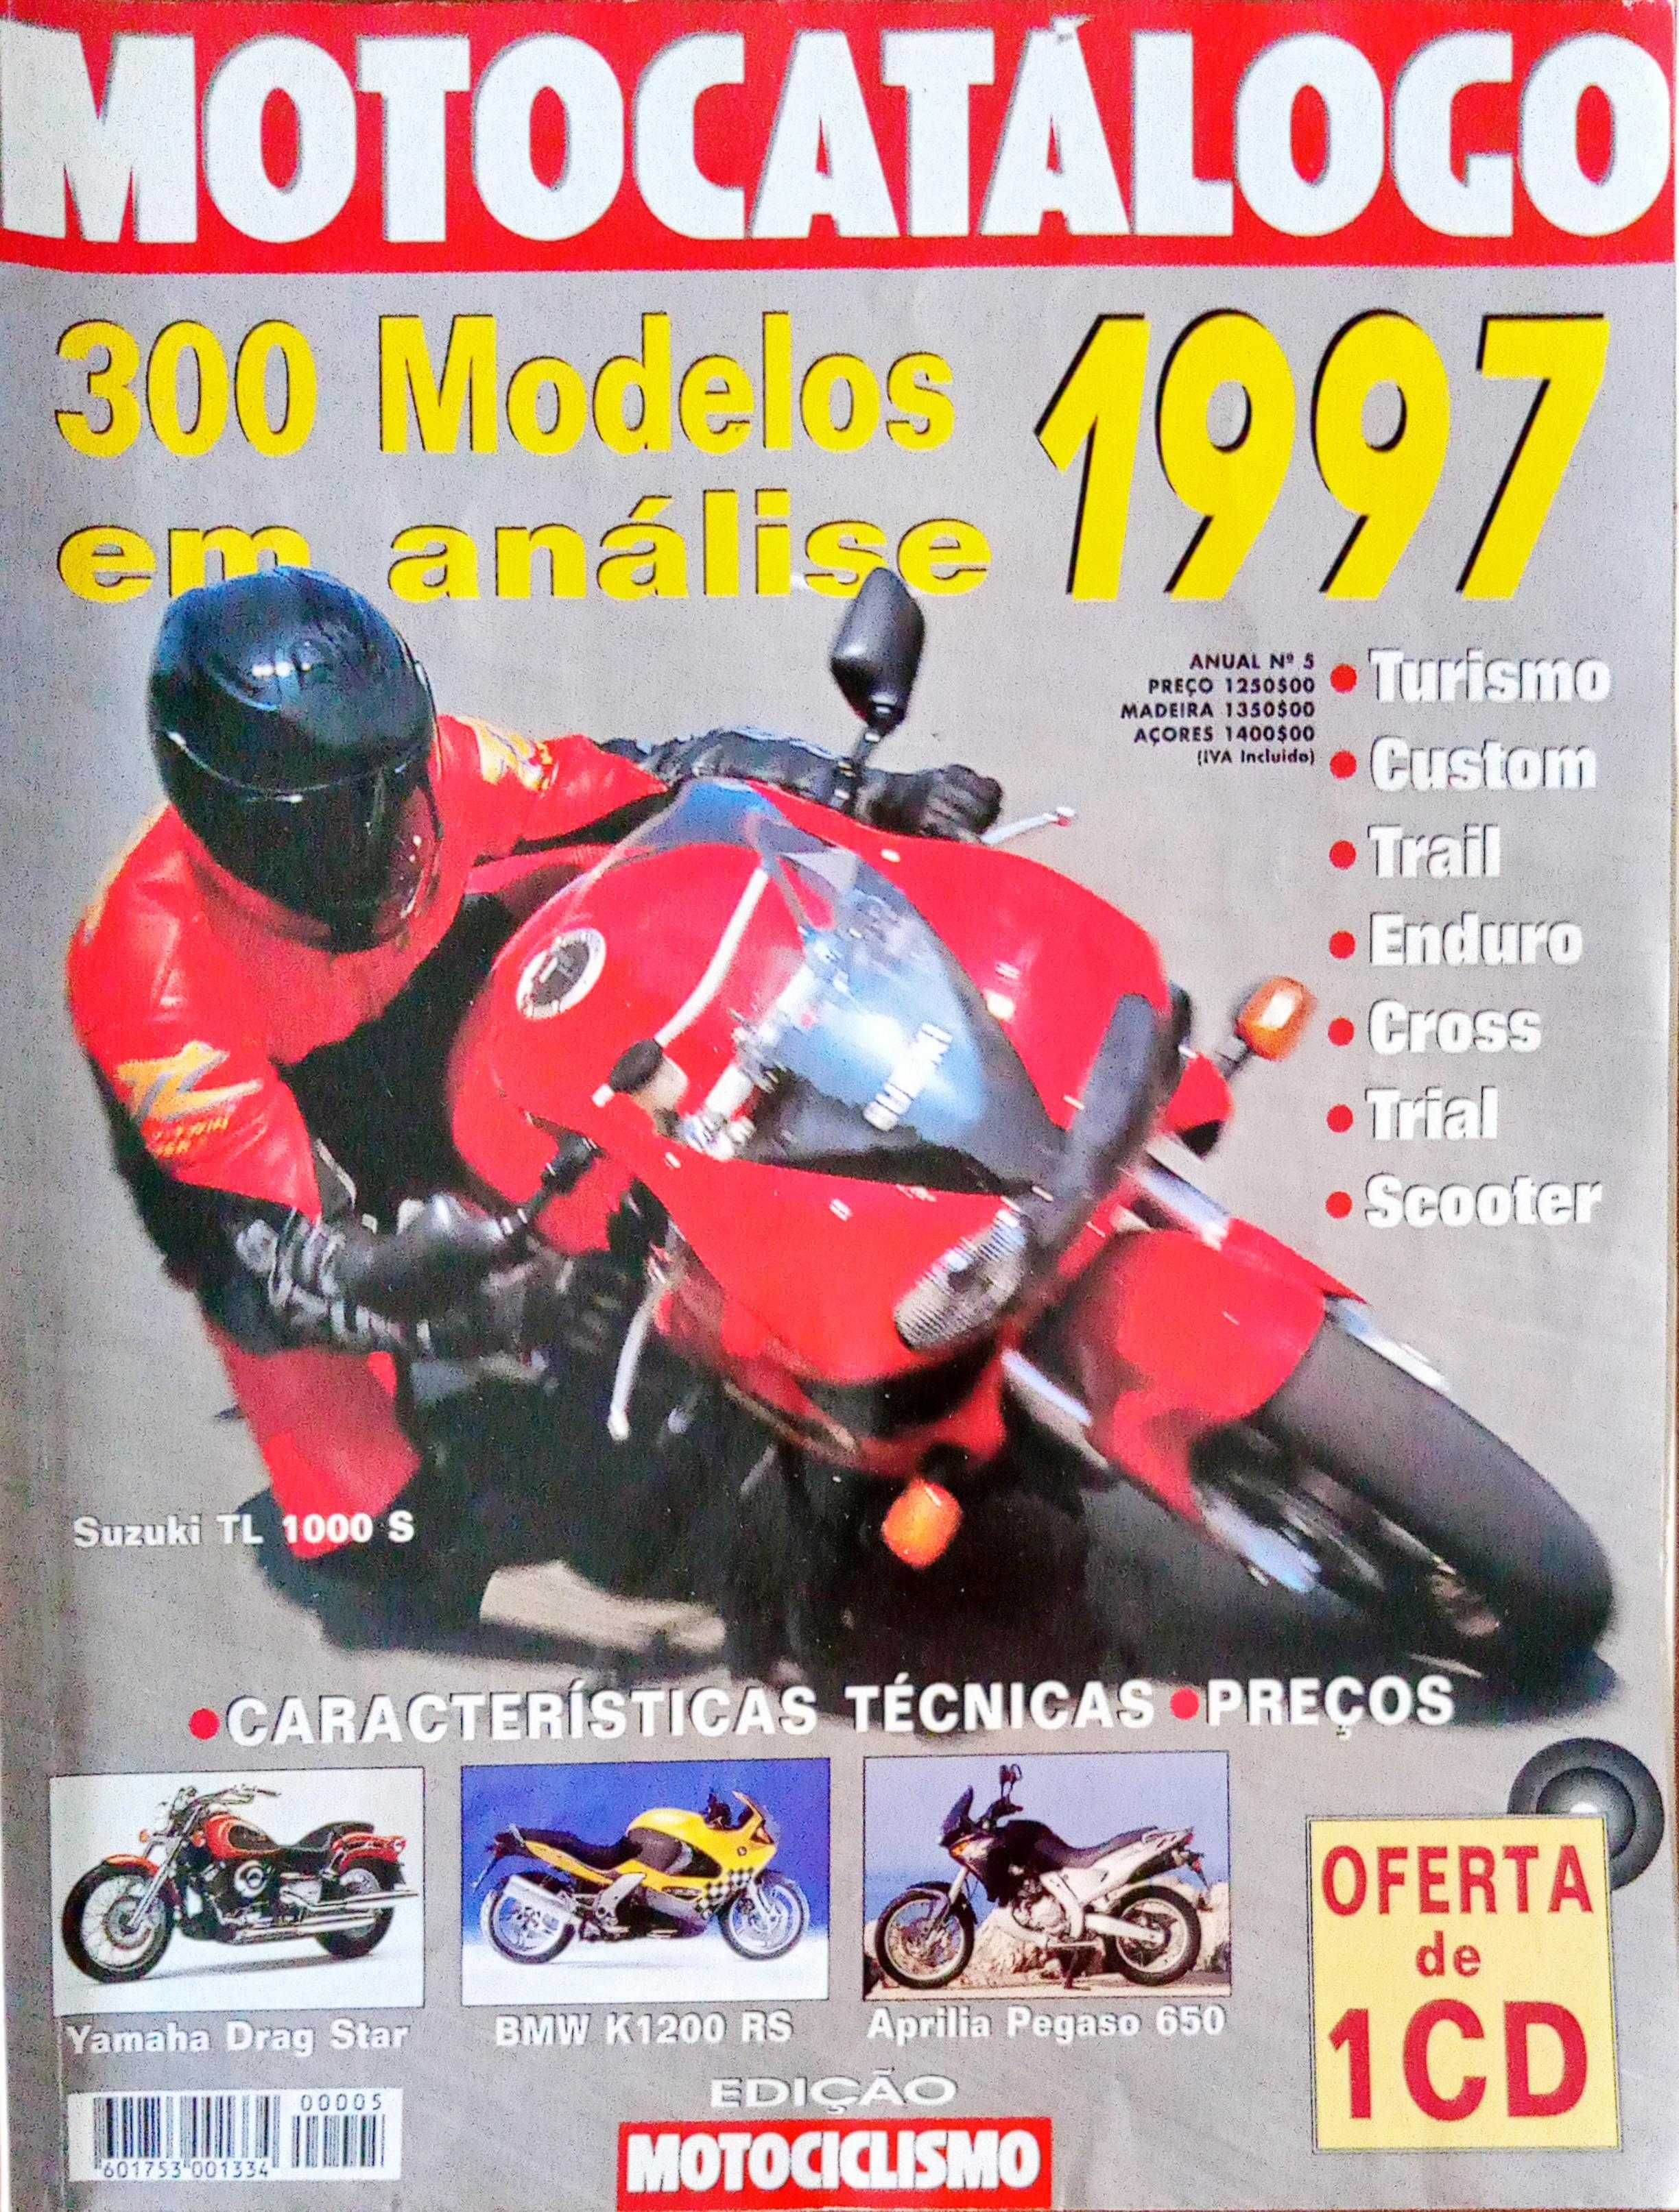 Motocatálogo nº5 1997